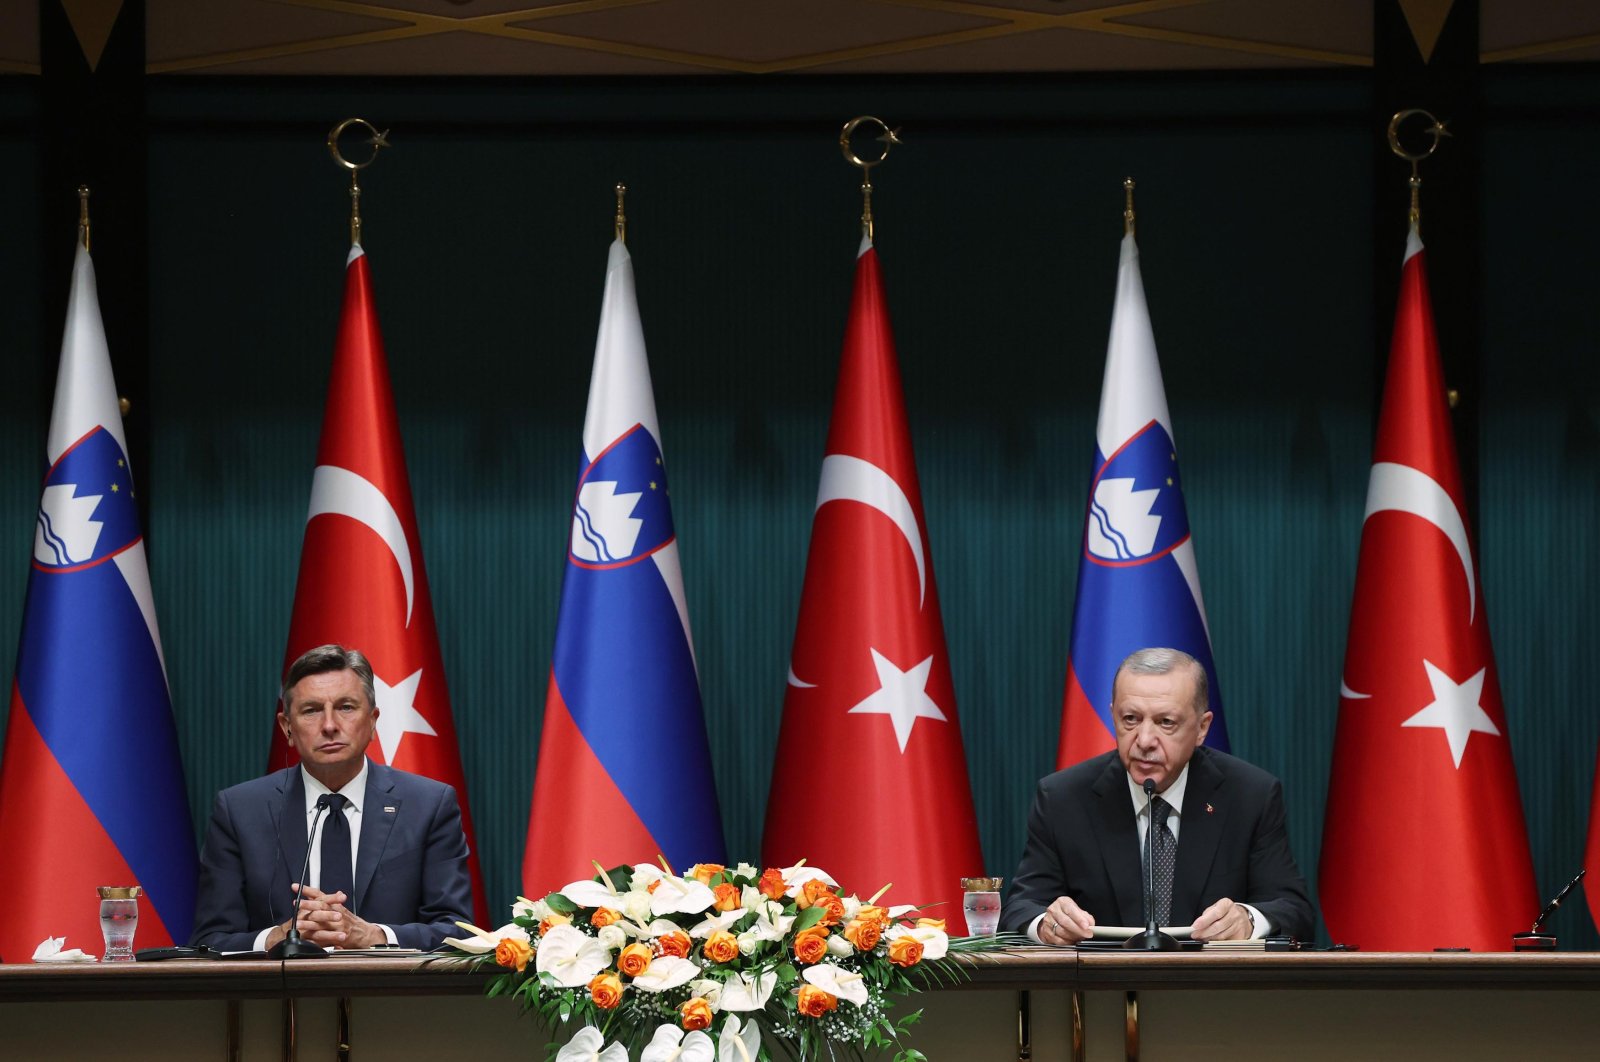 'Partnership deal shows importance Türkiye, Slovenia give each other'